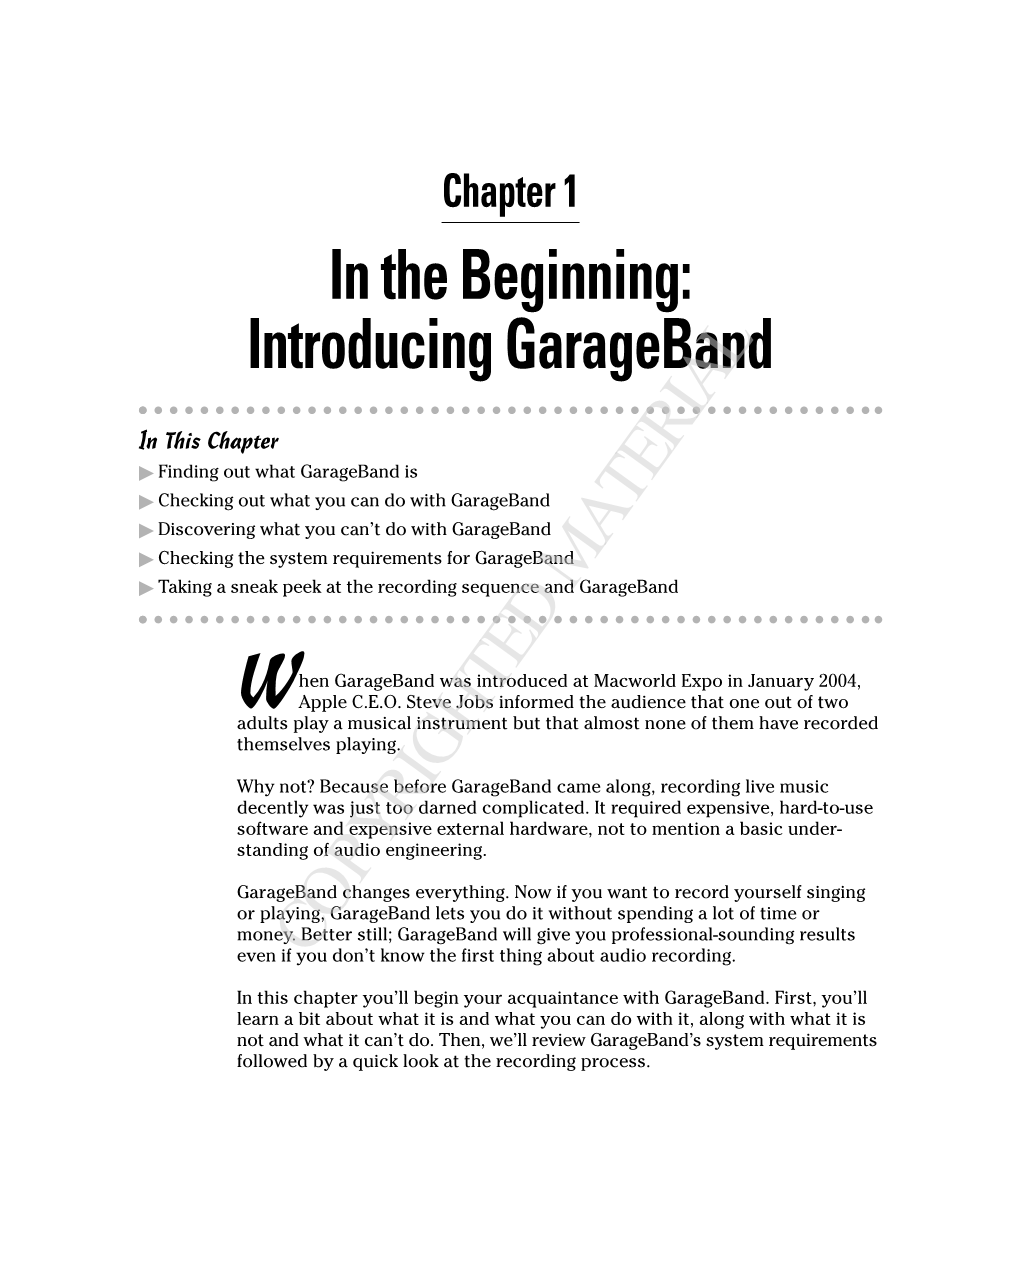 In the Beginning: Introducing Garageband